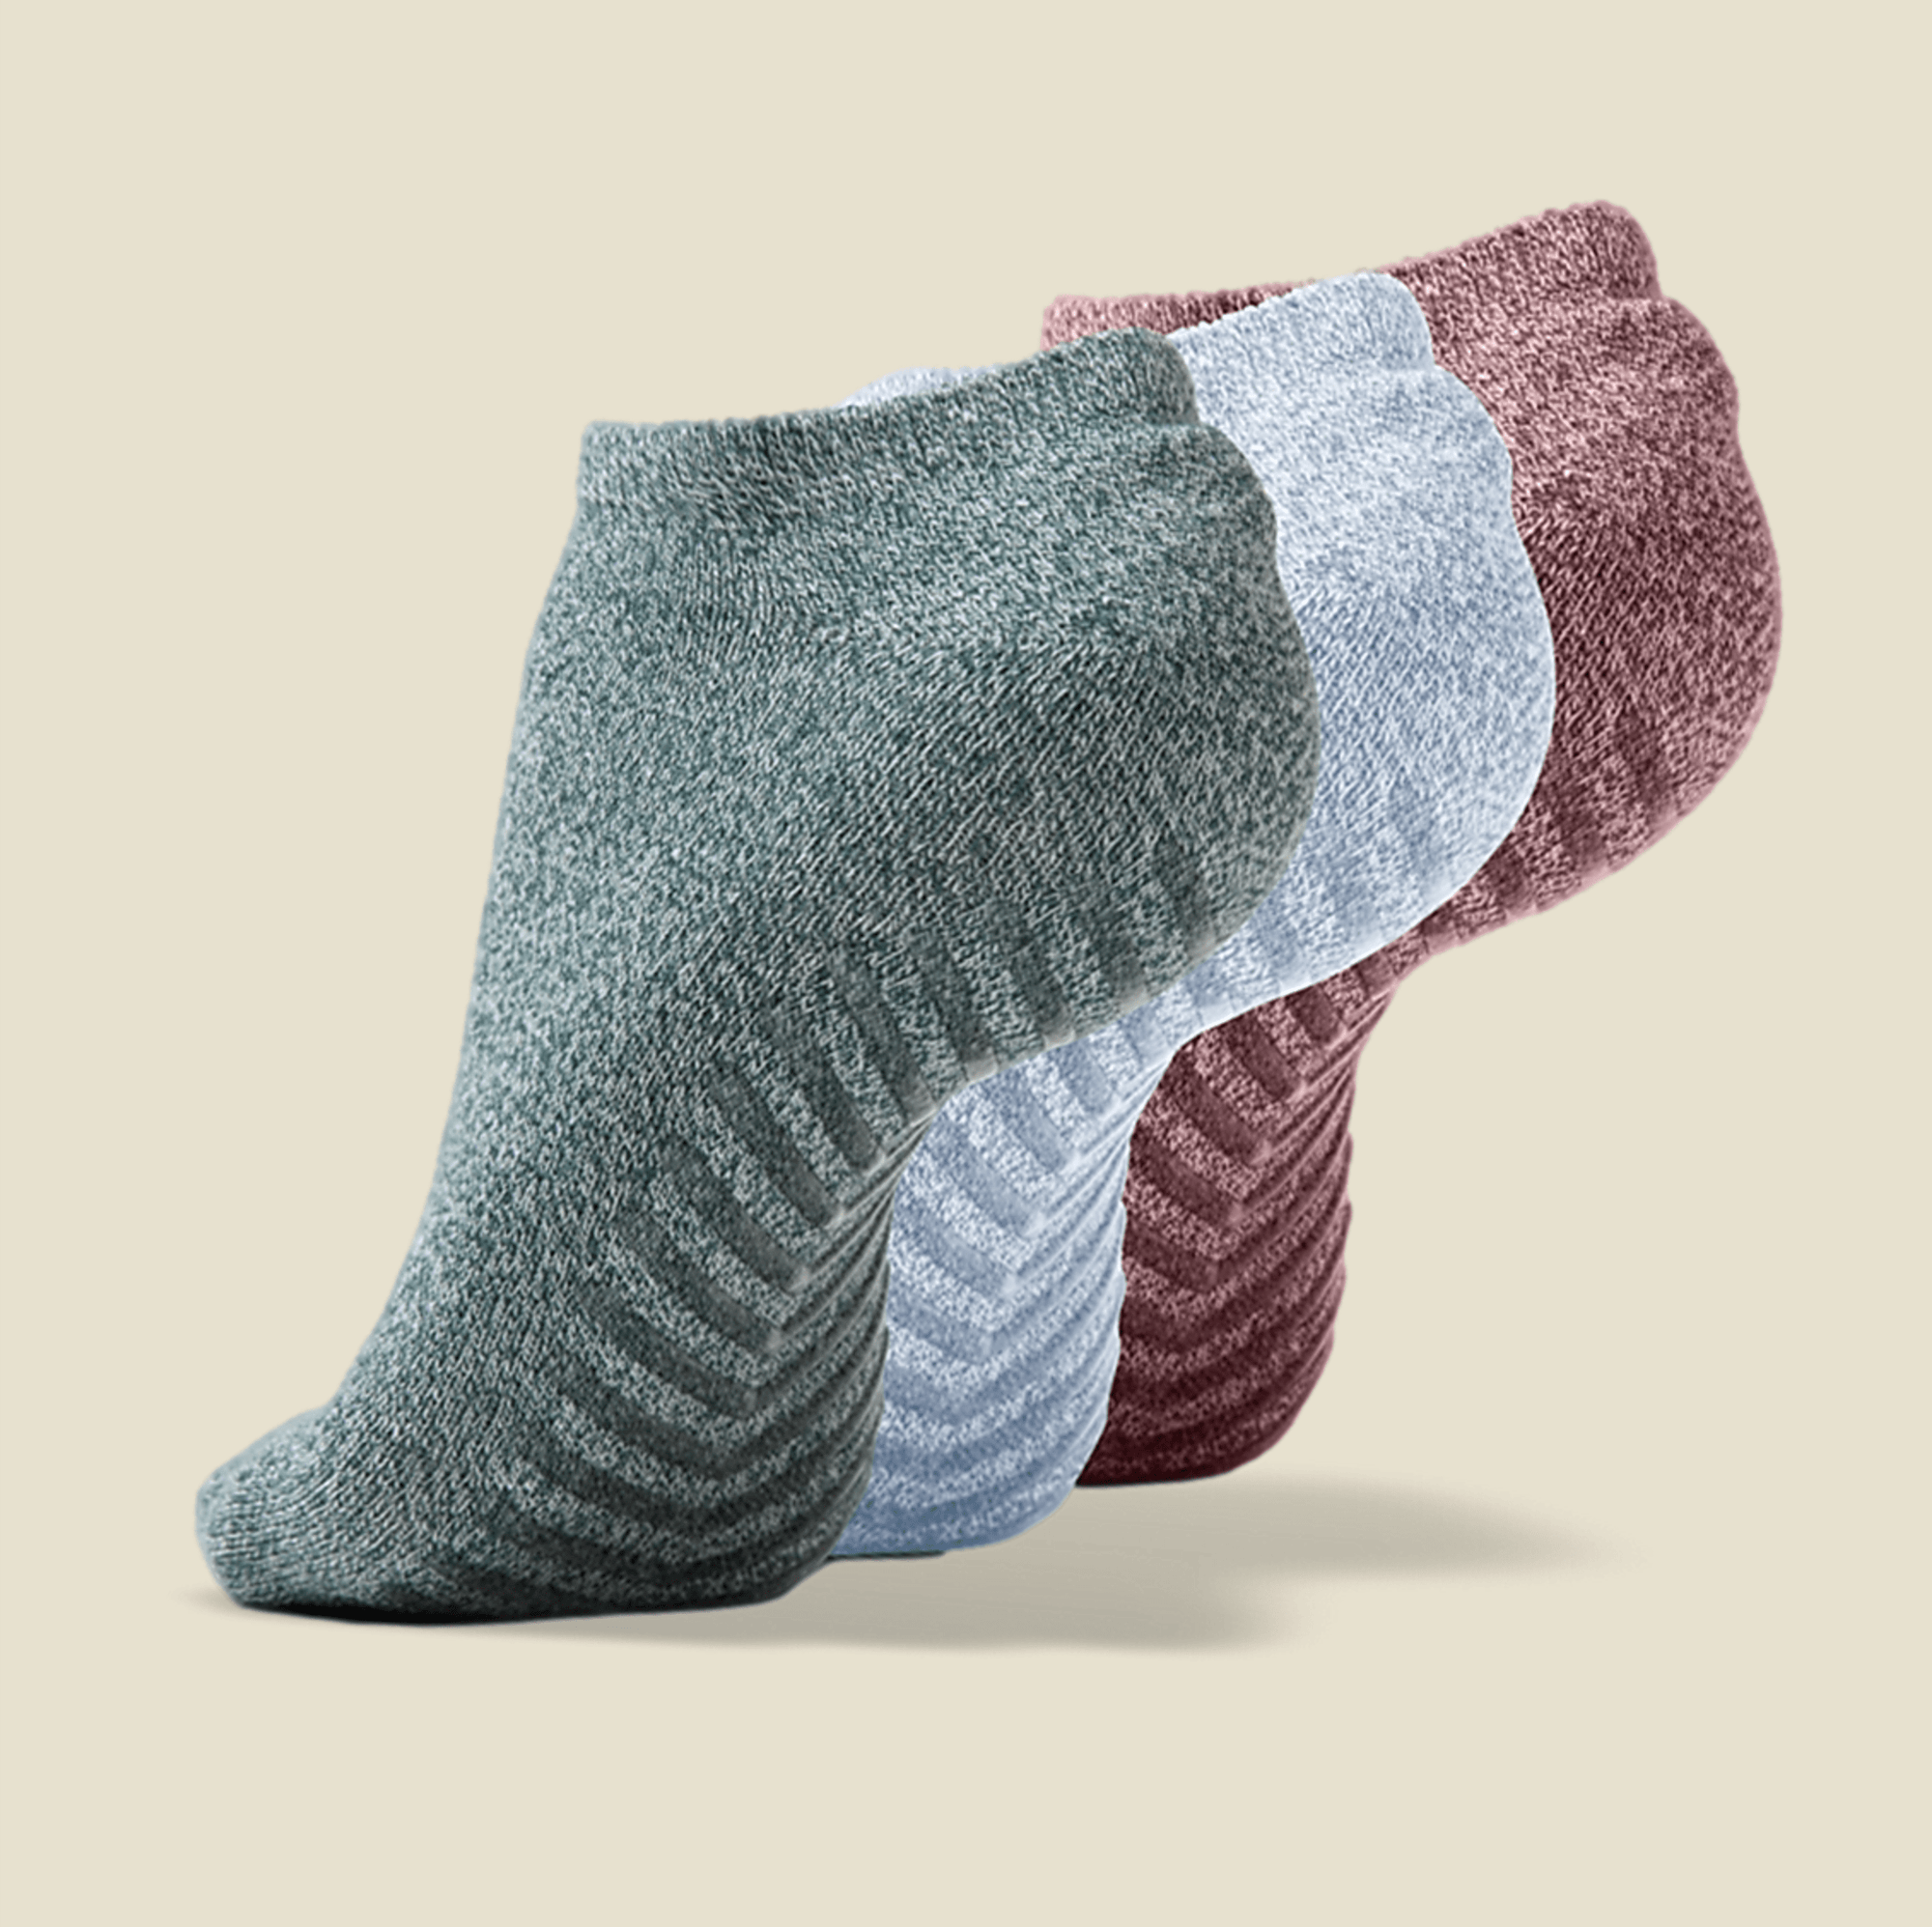 Men's Green, Blue, Maroon Low Cut Ankle Non Skid Socks - 3 pairs - Gripjoy Socks